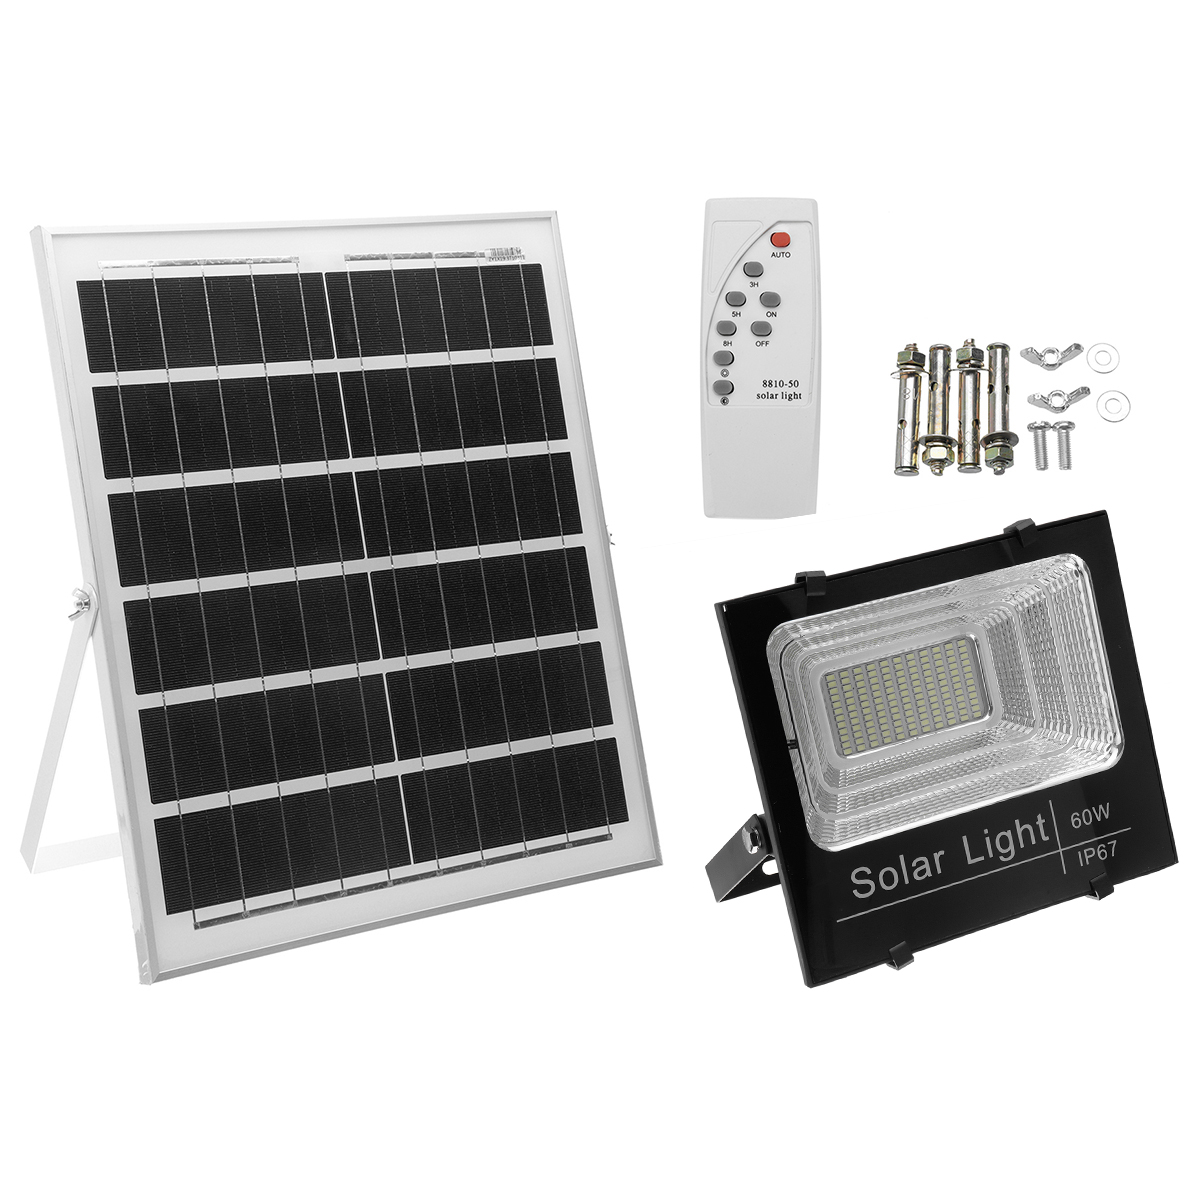 

25w/40w/60w Solar Flood Light Solar LED Spotlight W/ Manual/Remote Control Solar Panel IP67 Waterproof